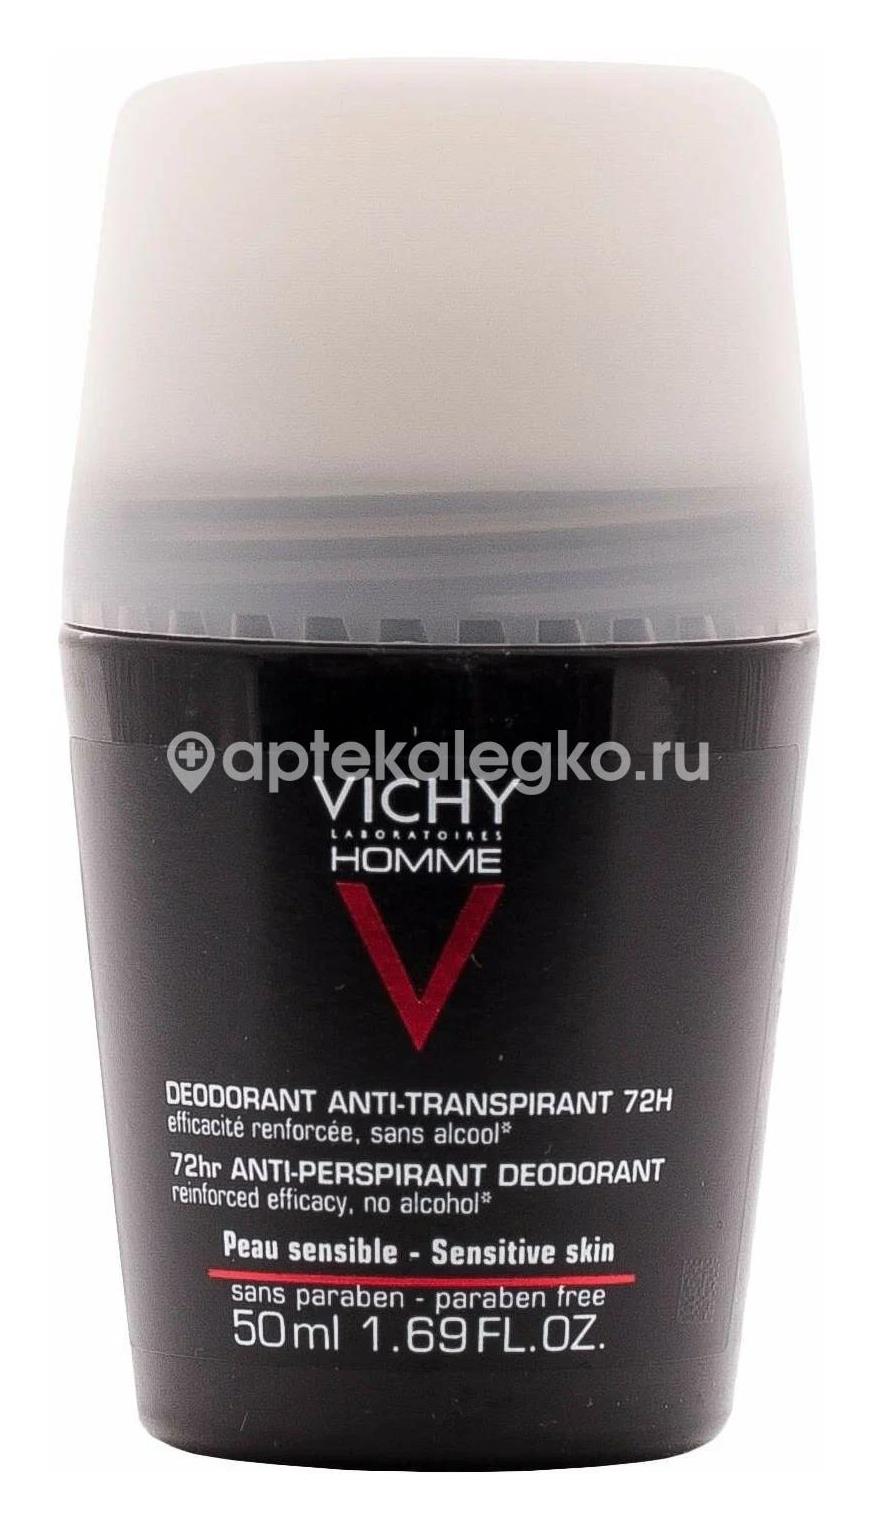 Виши homme дезодорант - антиперспирант 72ч п/изб.потоотд. 50м (дуопак,скидка на 2 - й 50%) - 1